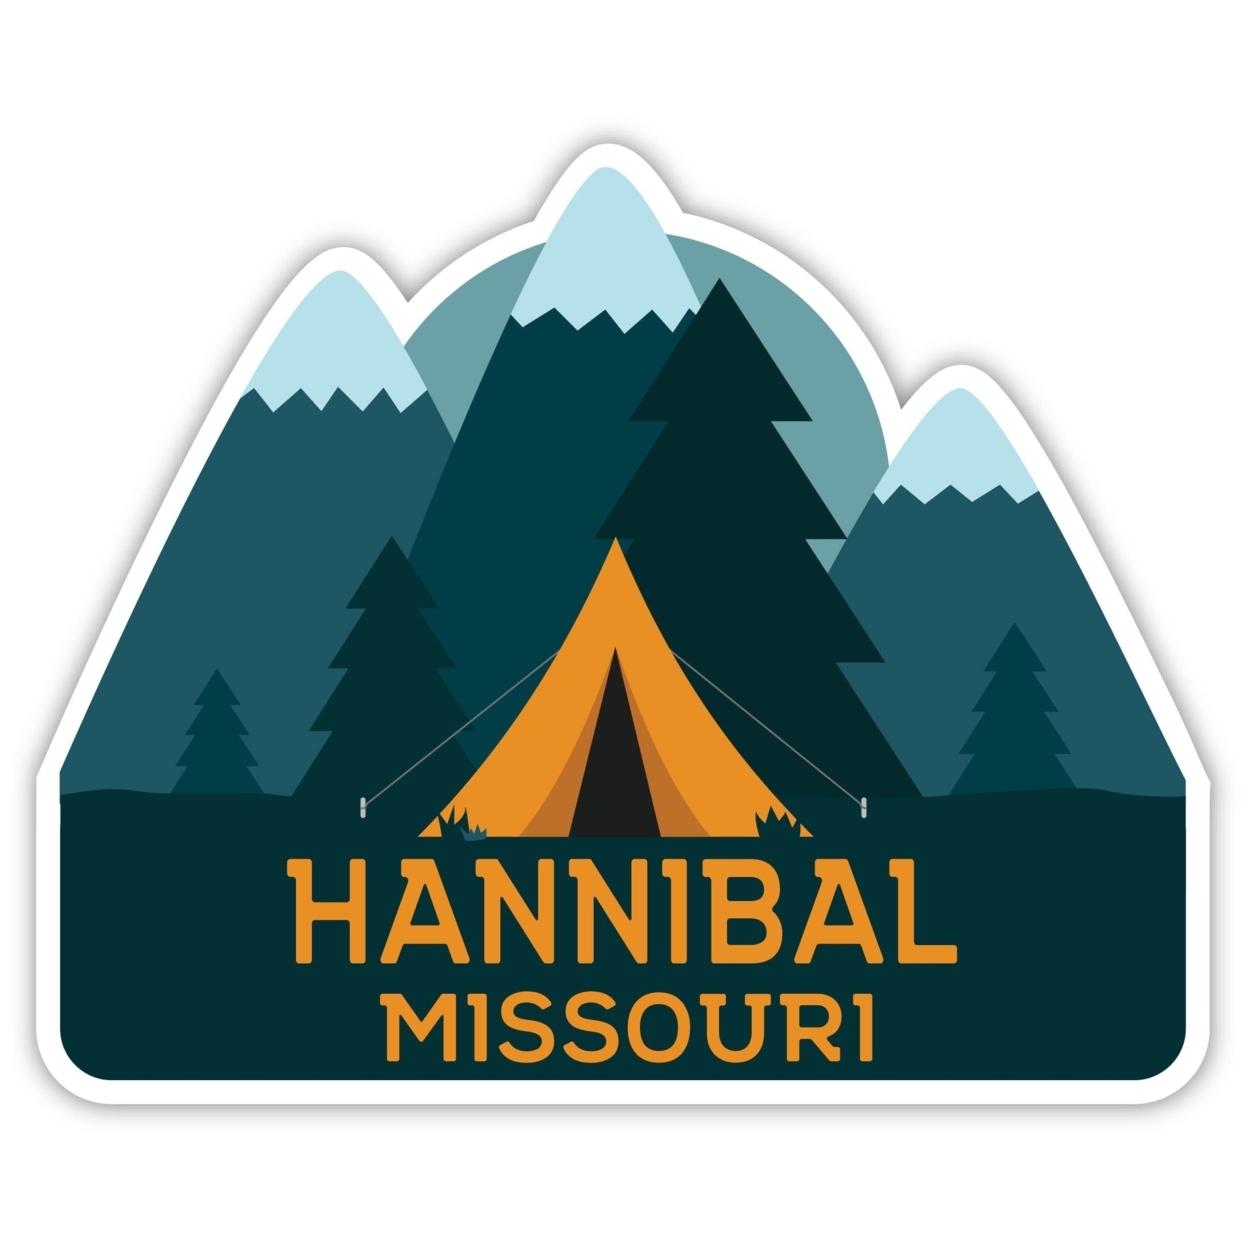 Hannibal Missouri Souvenir Decorative Stickers (Choose Theme And Size) - 4-Pack, 4-Inch, Tent